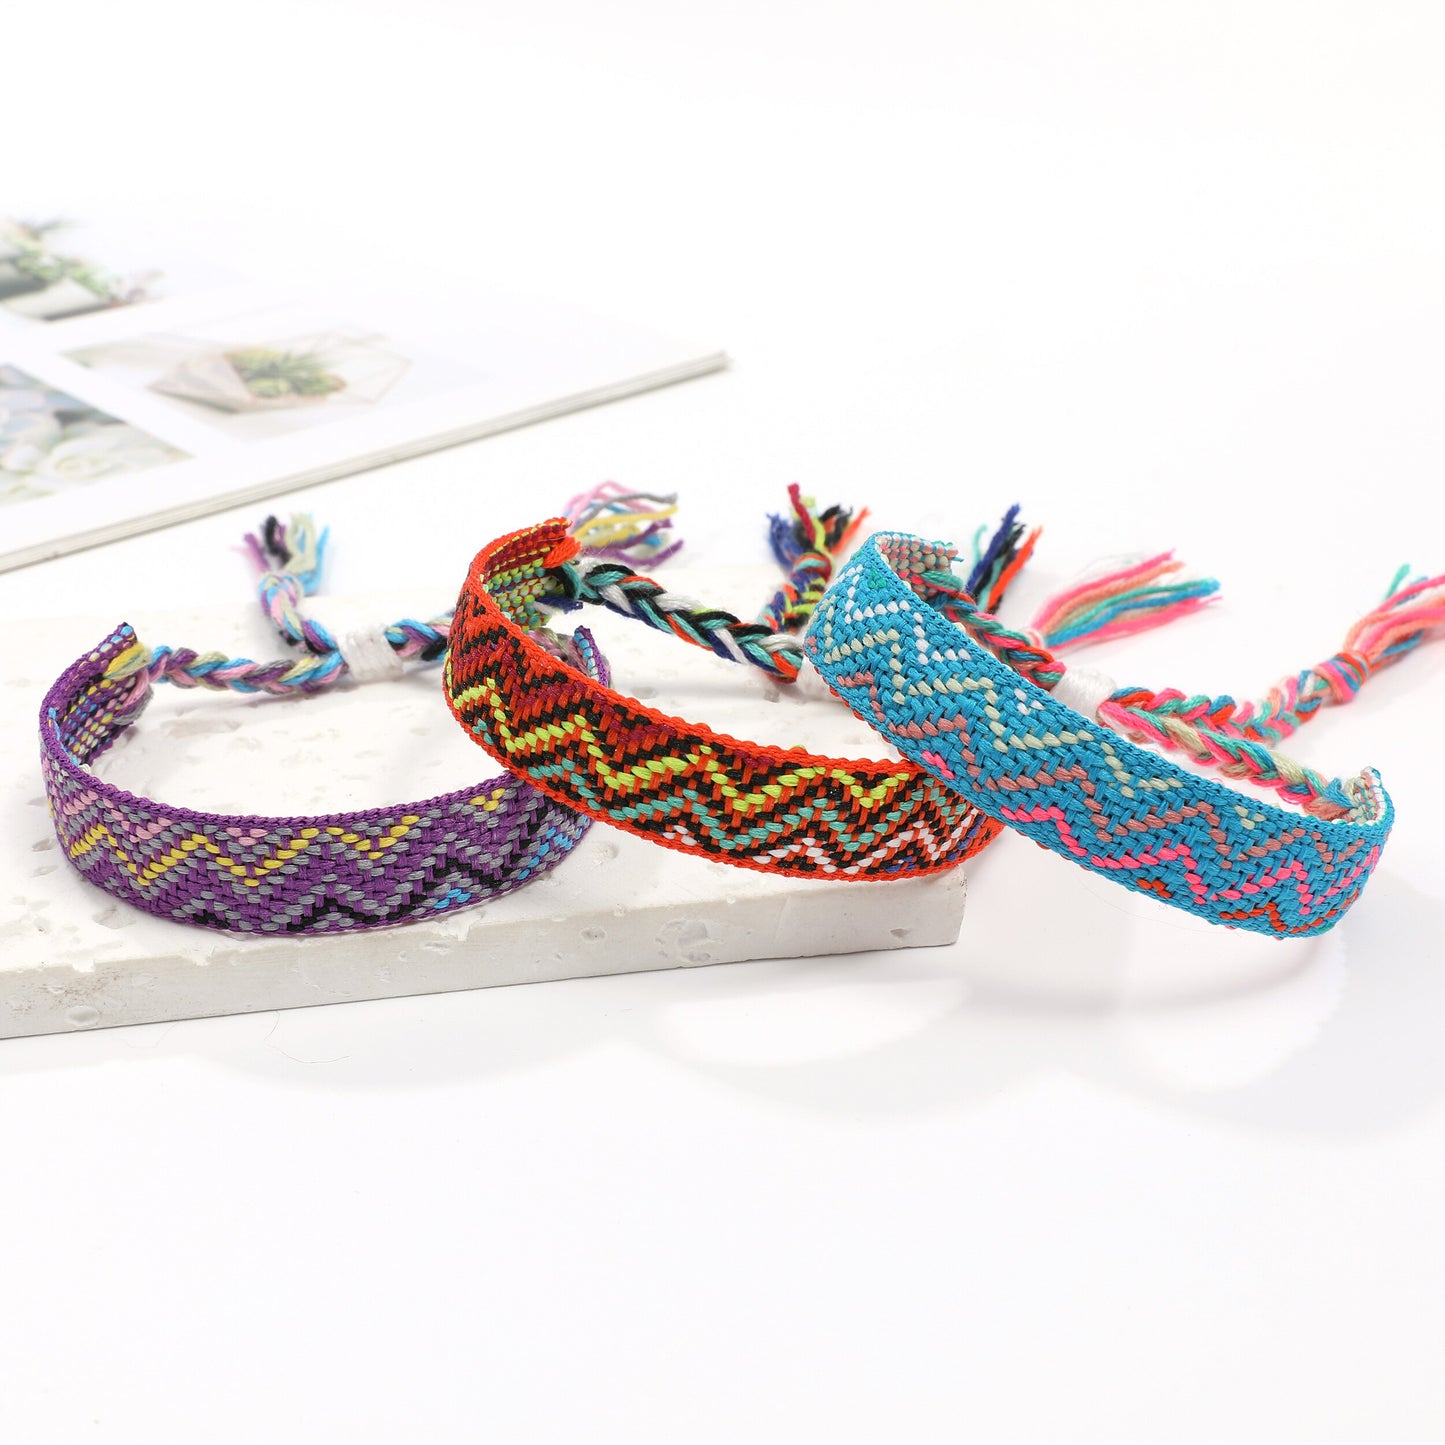 12pcs Nepali Bracelet for Women Girls Adjustable Braided Wave Bracelet Anklet Wristband Cuff Jewelry Gifts